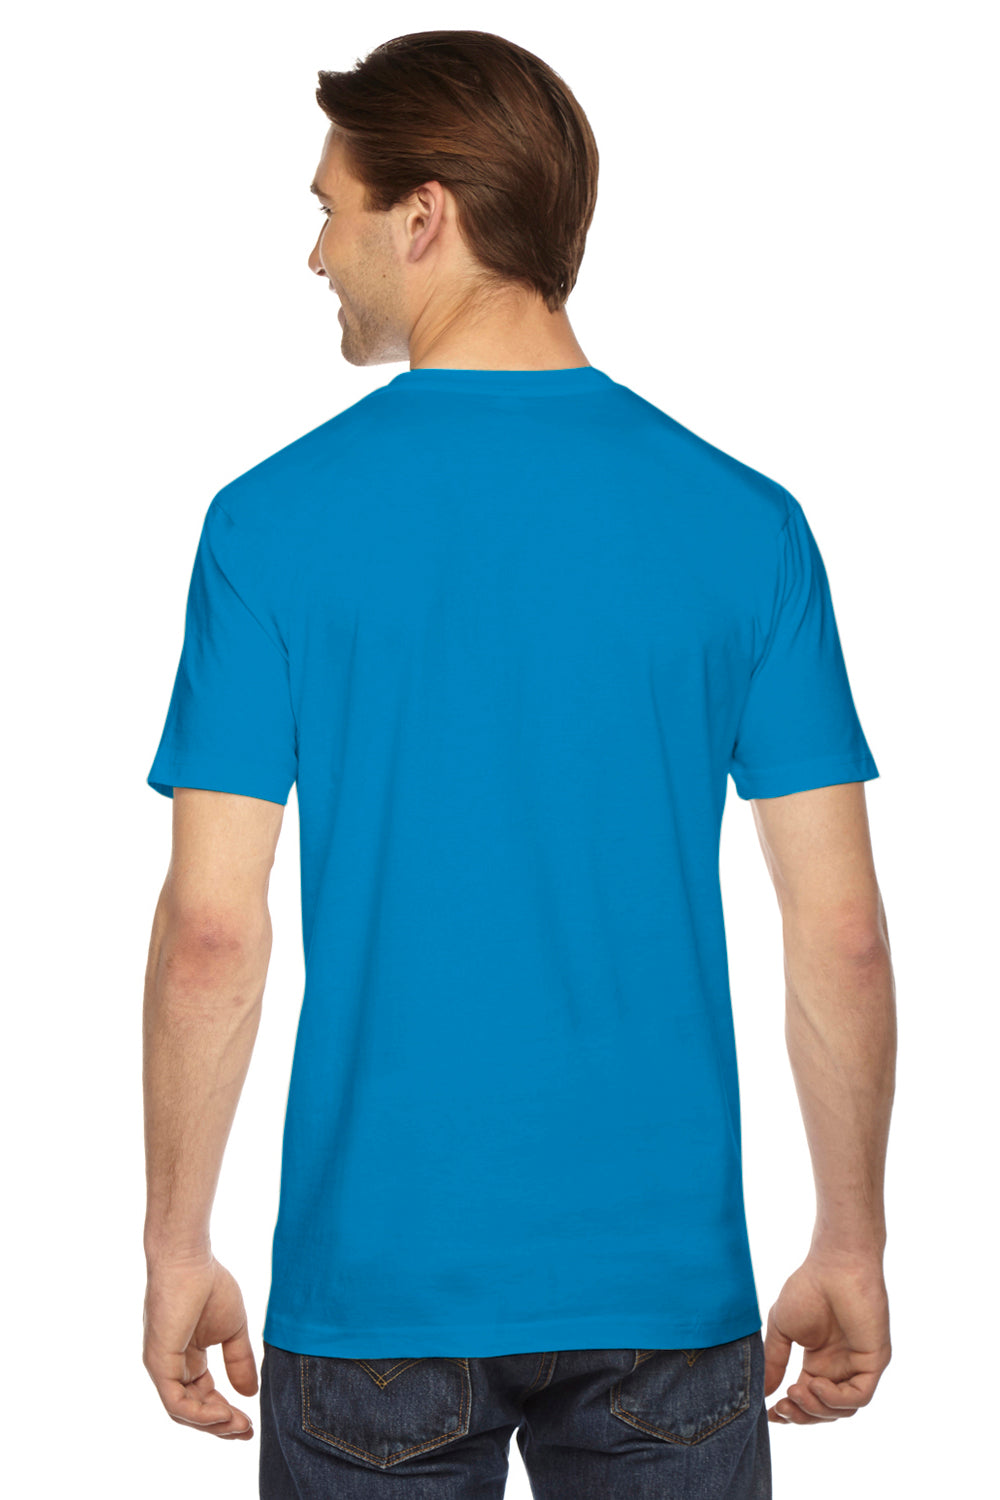 American Apparel 2001 Mens USA Made Fine Jersey Short Sleeve Crewneck T-Shirt Teal Blue Back